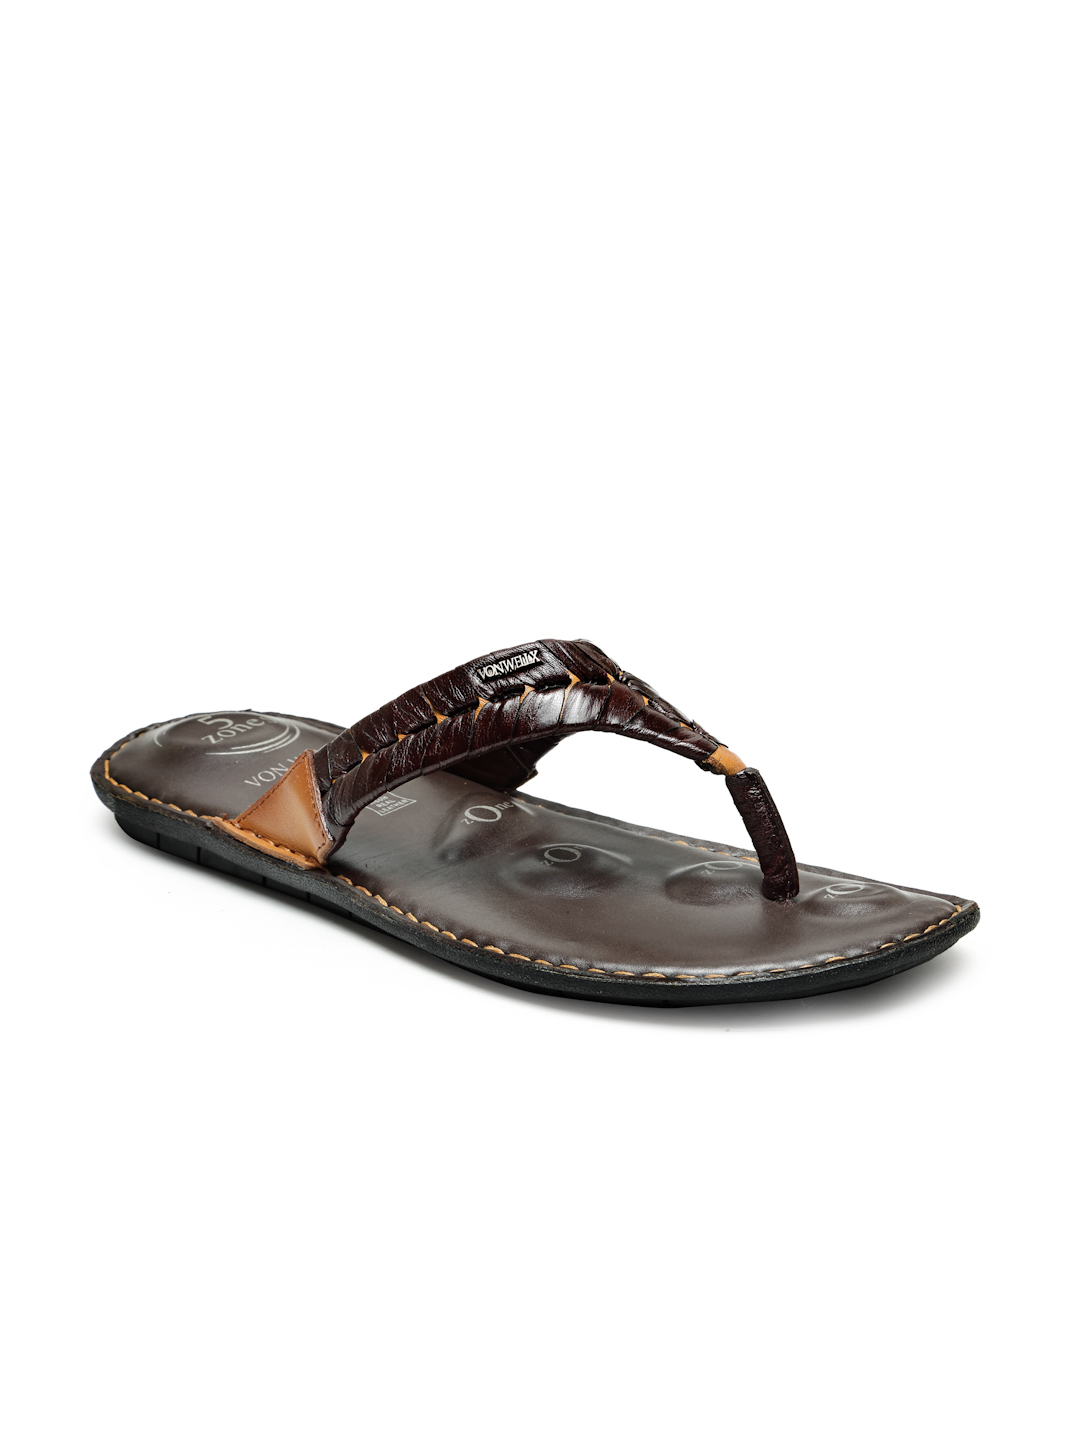 Buy Von Wellx Germany Comfort Men's Tan Slippers Alonso Online in Mysore